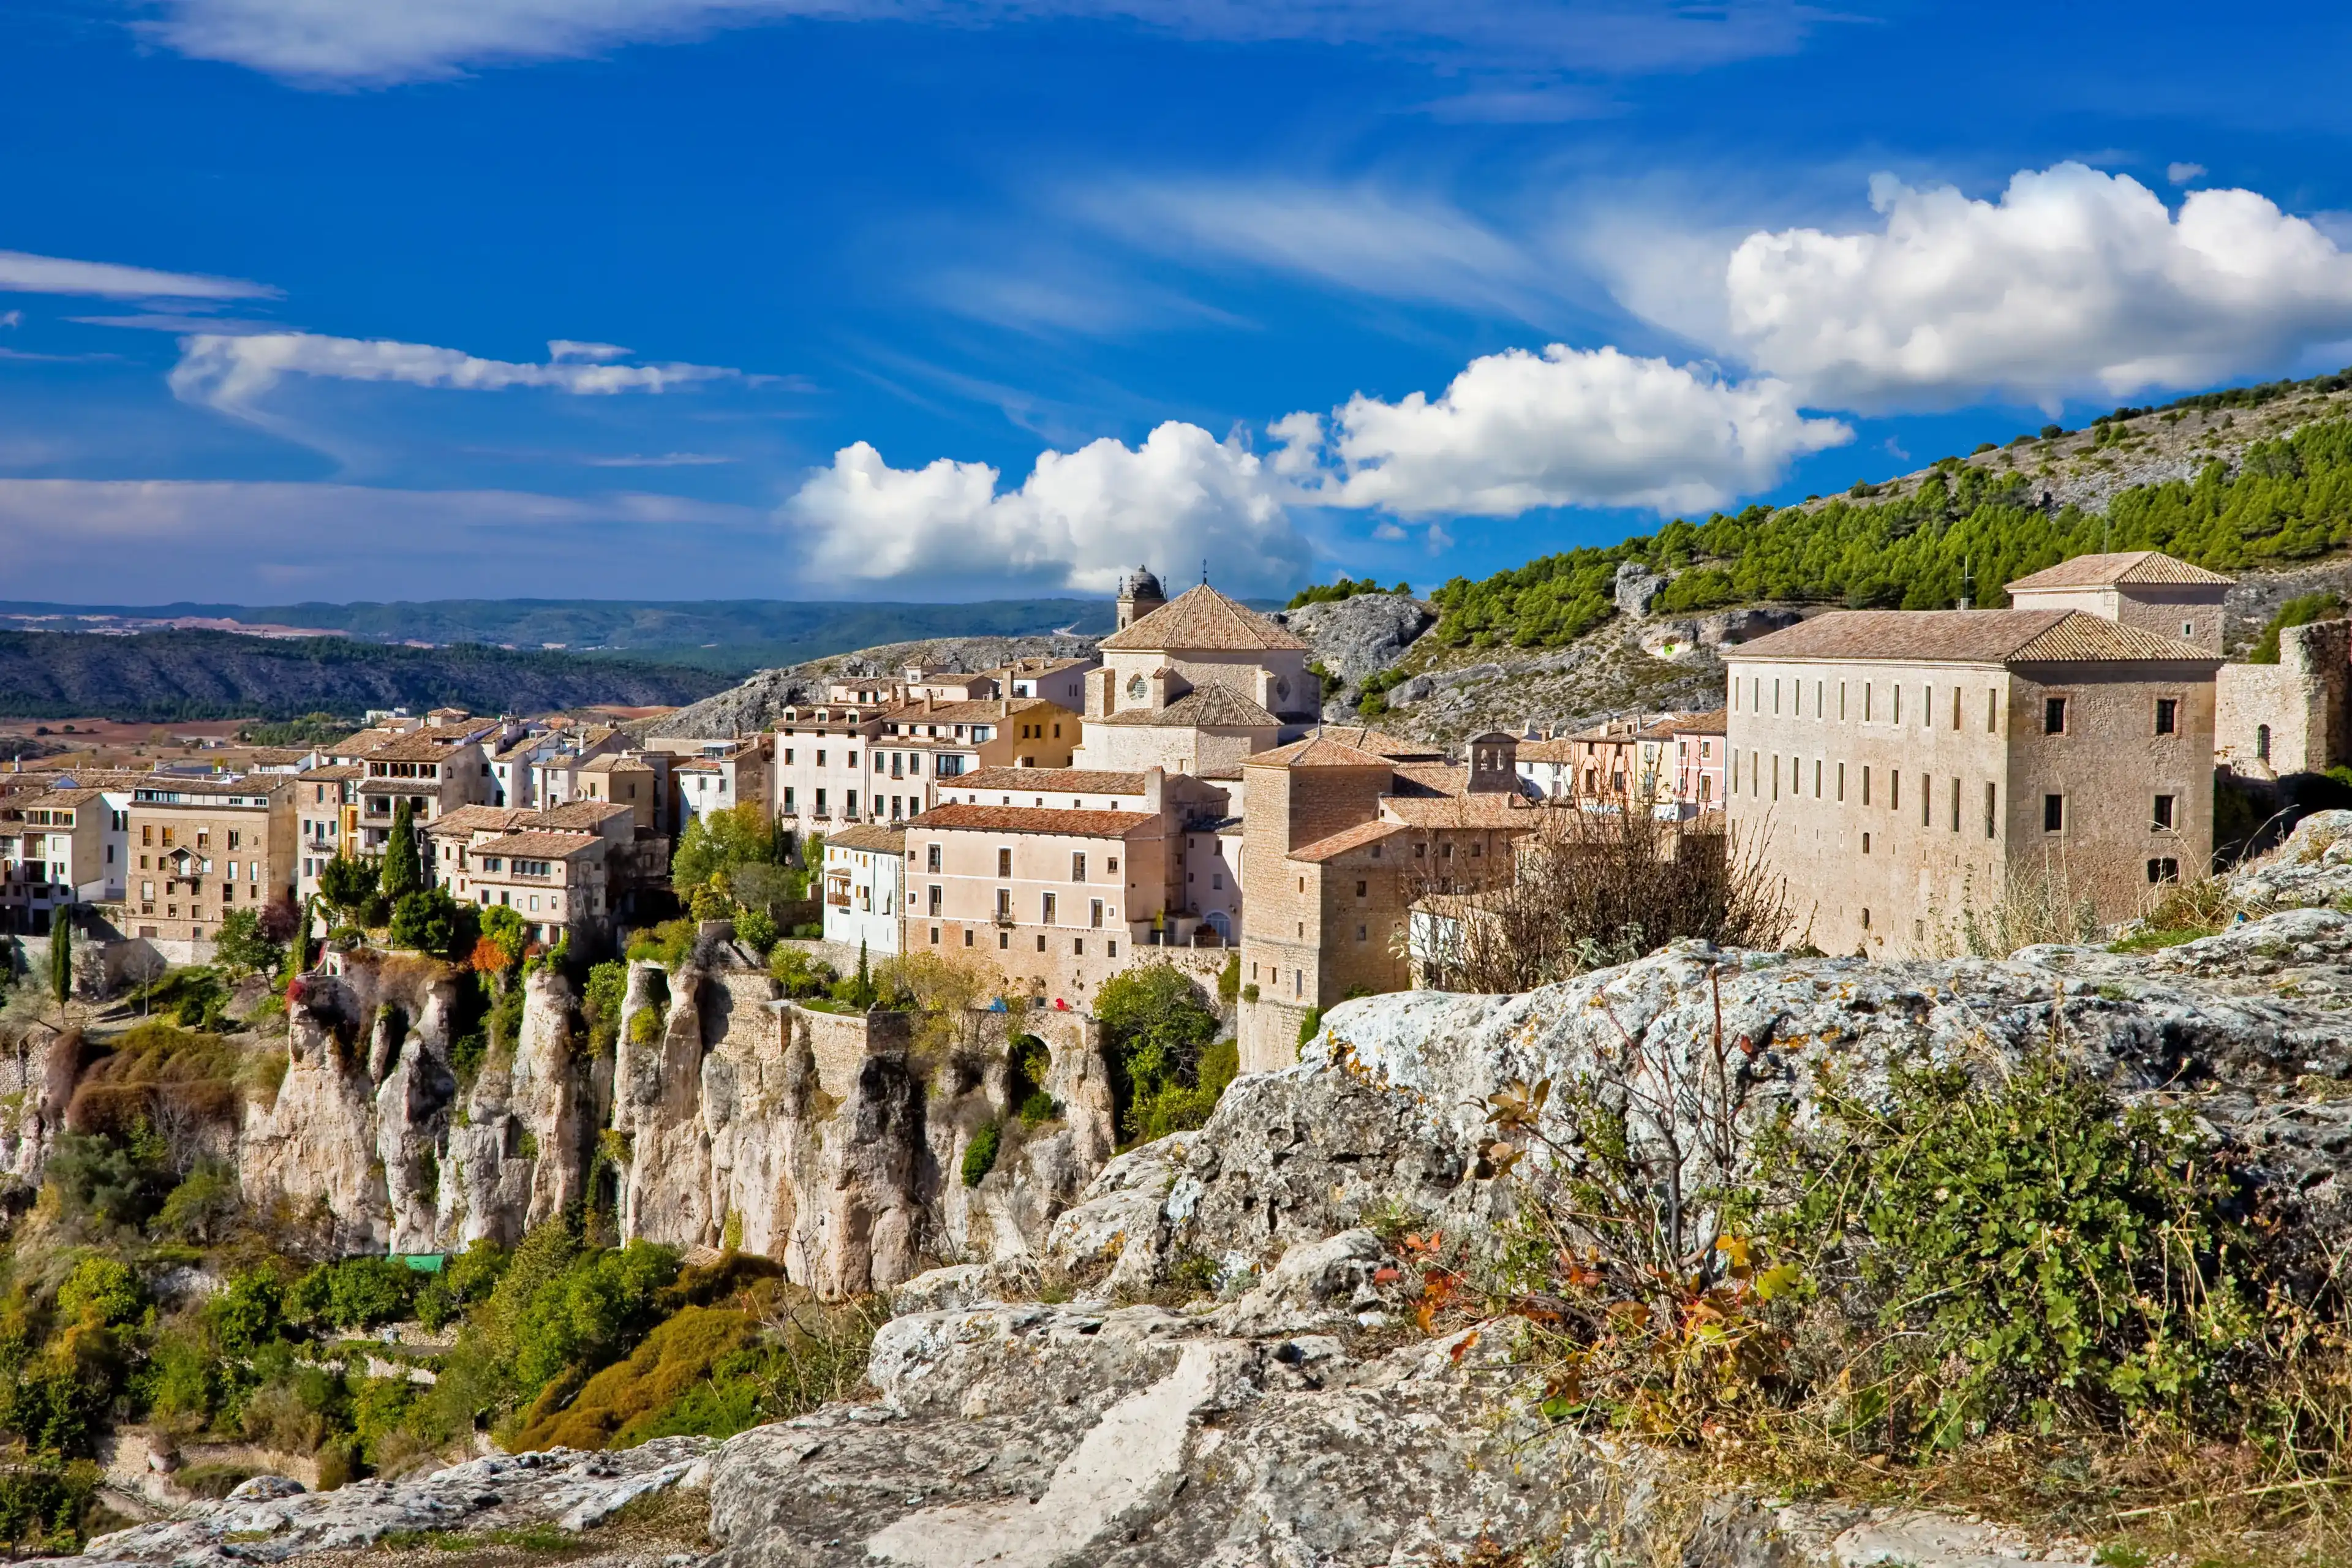 Best Cuenca hotels. Cheap hotels in Cuenca, Spain